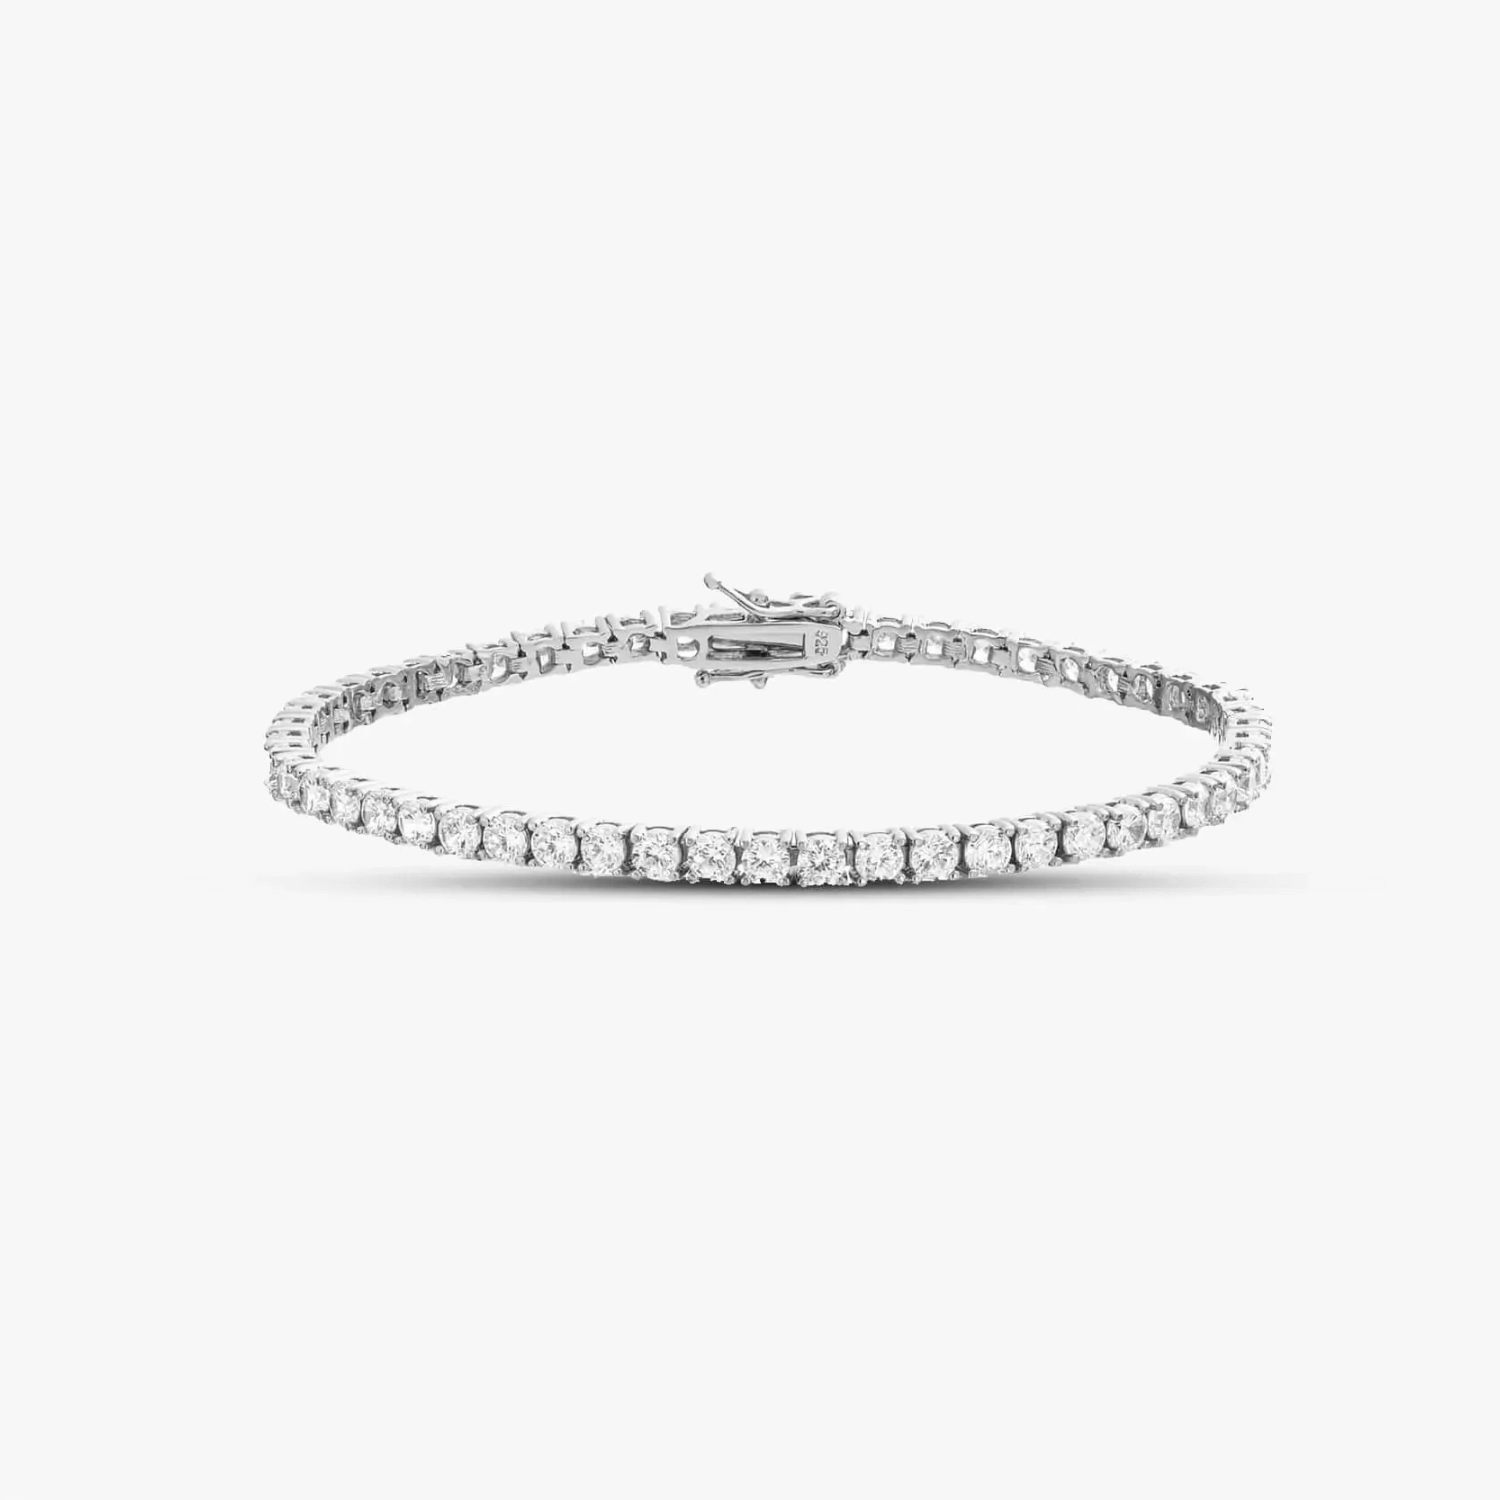 Tennis silver bracelet - Zirconium